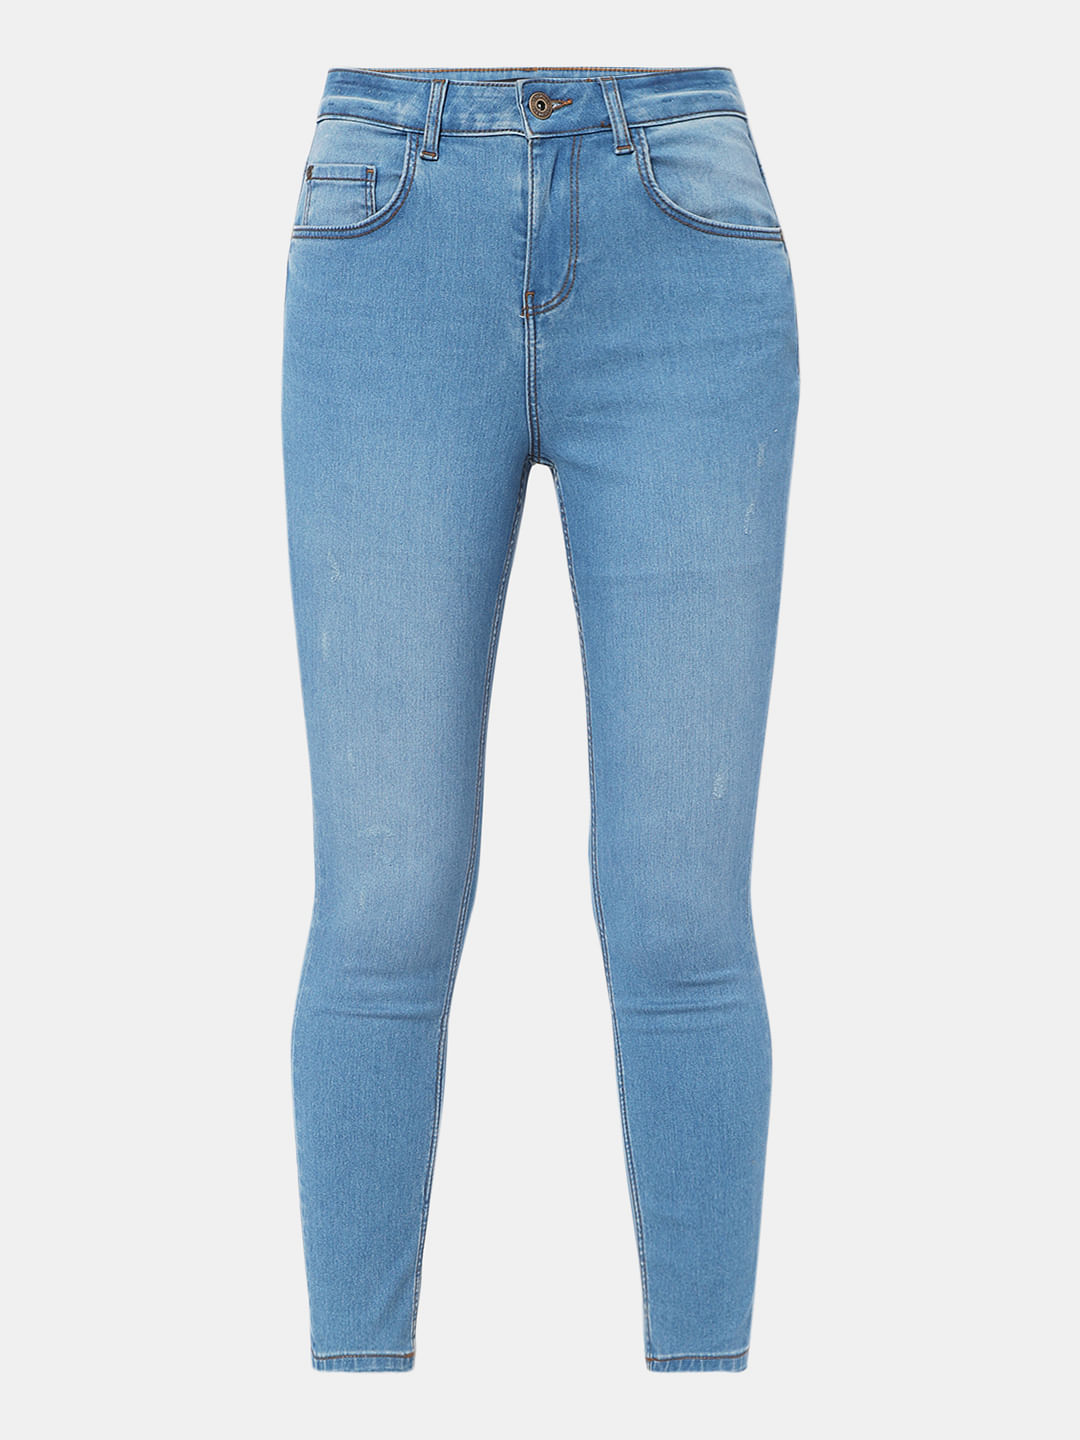 NEVADA Skinny Fit Jeans In Light Blue | DML Jeans